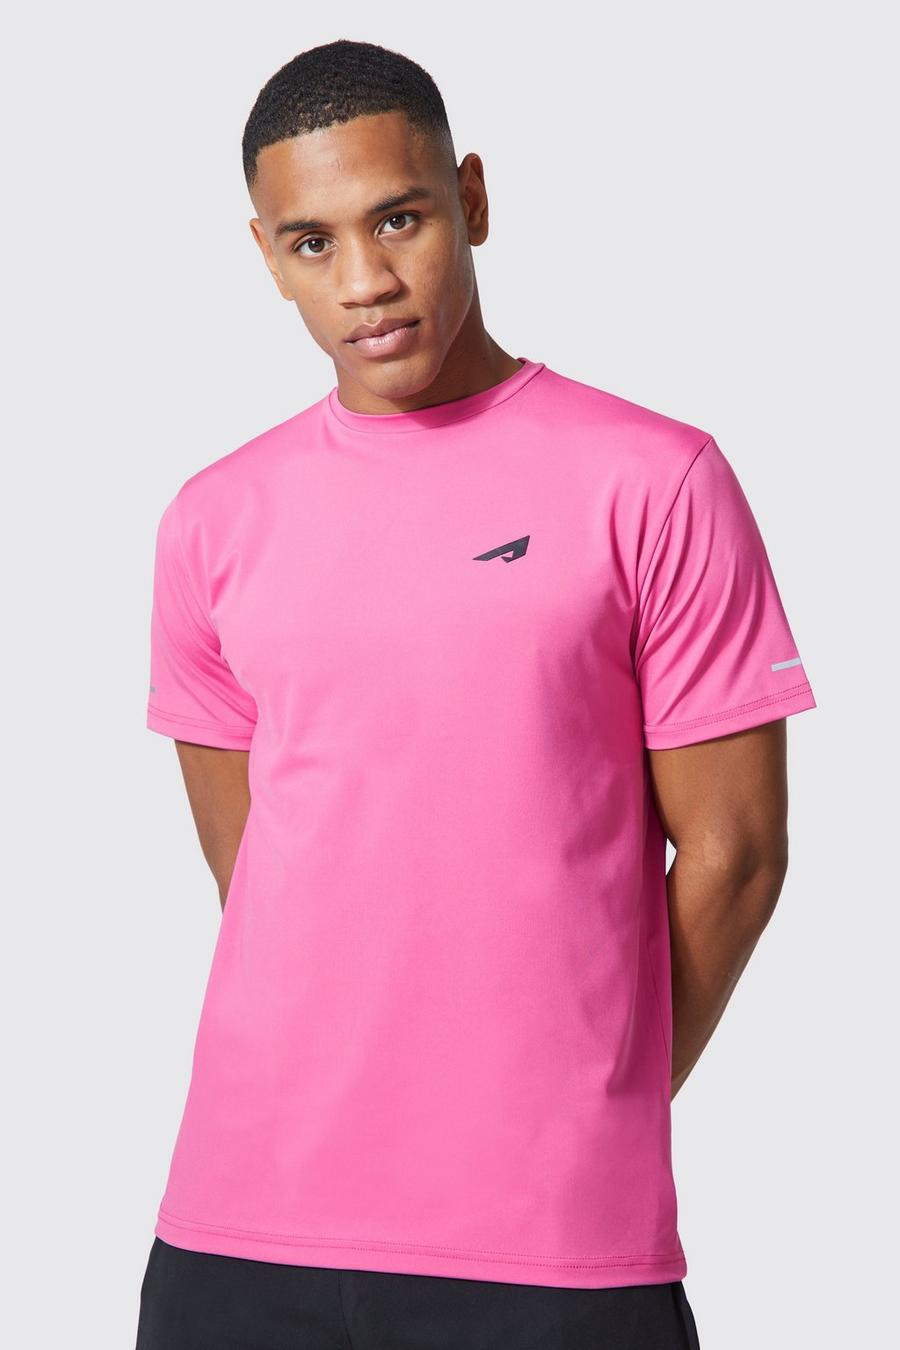 T-shirt Active con logo per alta performance, Bright pink